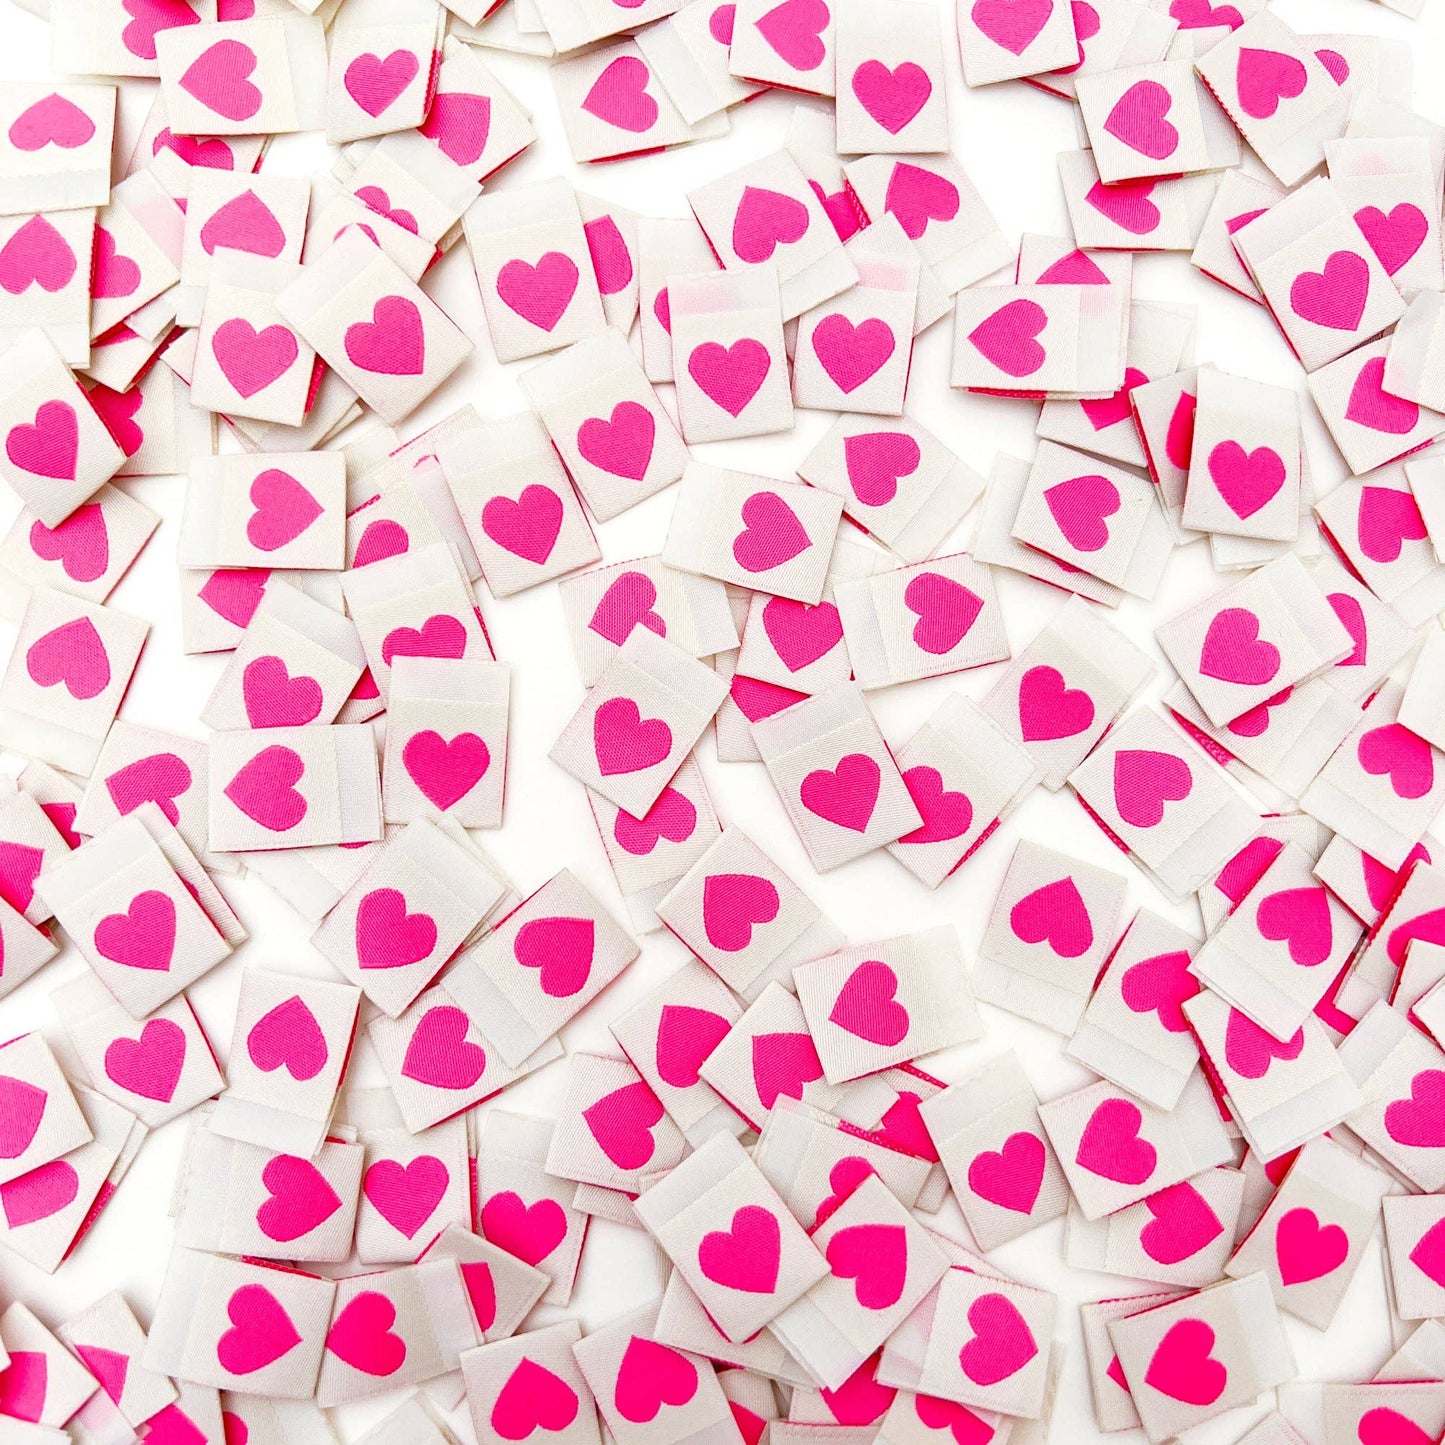 Pink Heart woven maker labels